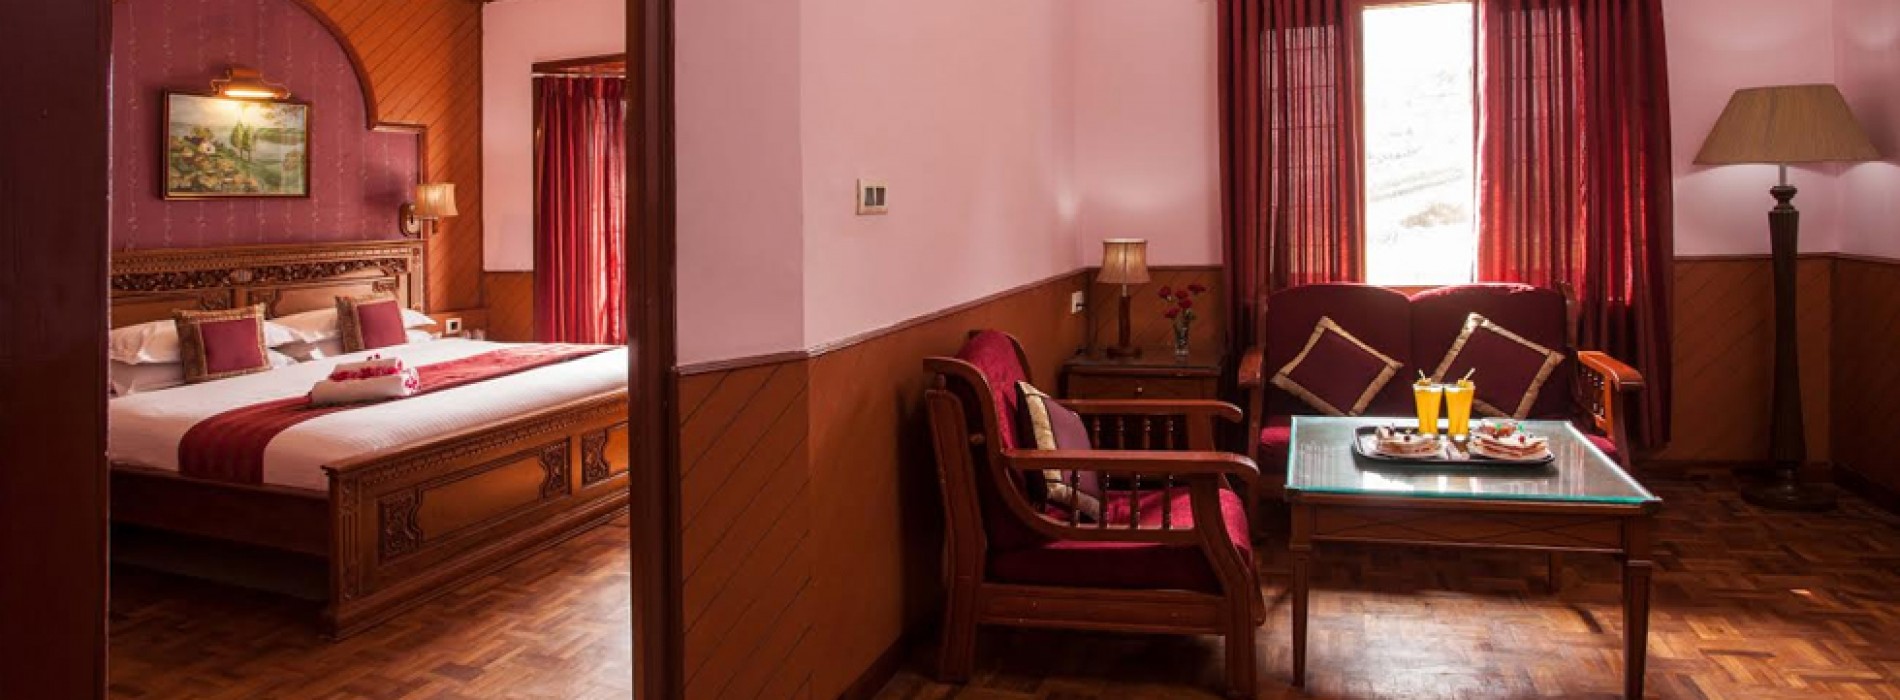 JC Residency Resorts in Kodai & Madurai affiliate with RCI